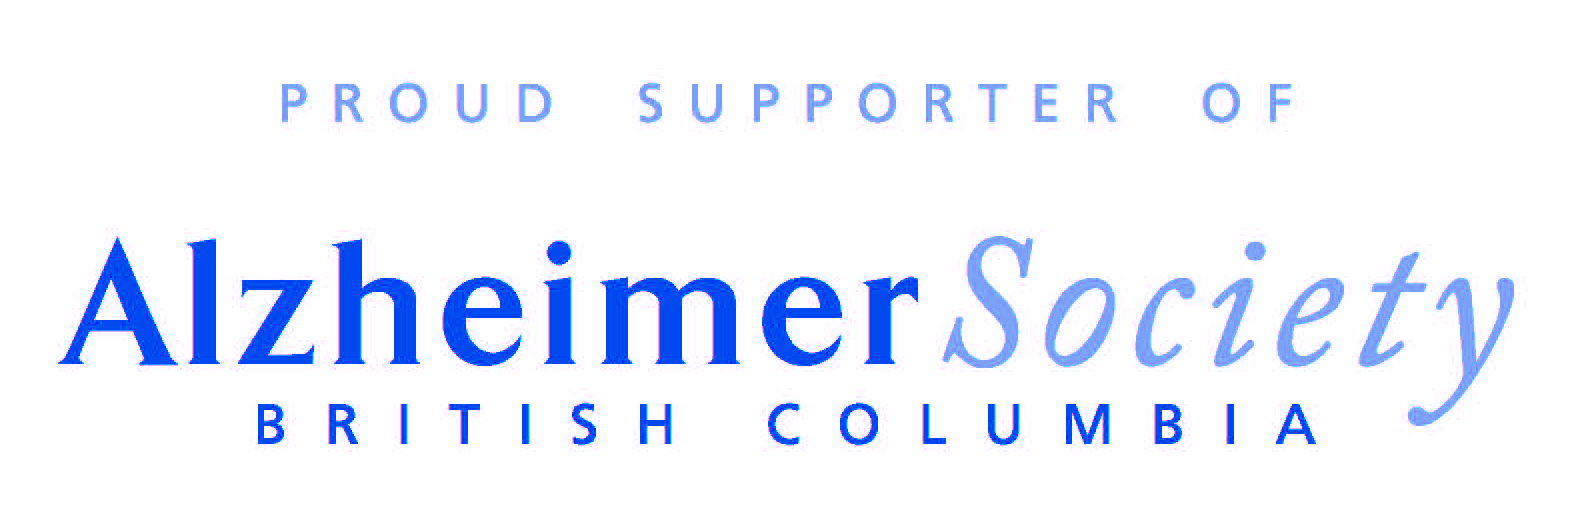 asbc proud supporter logo